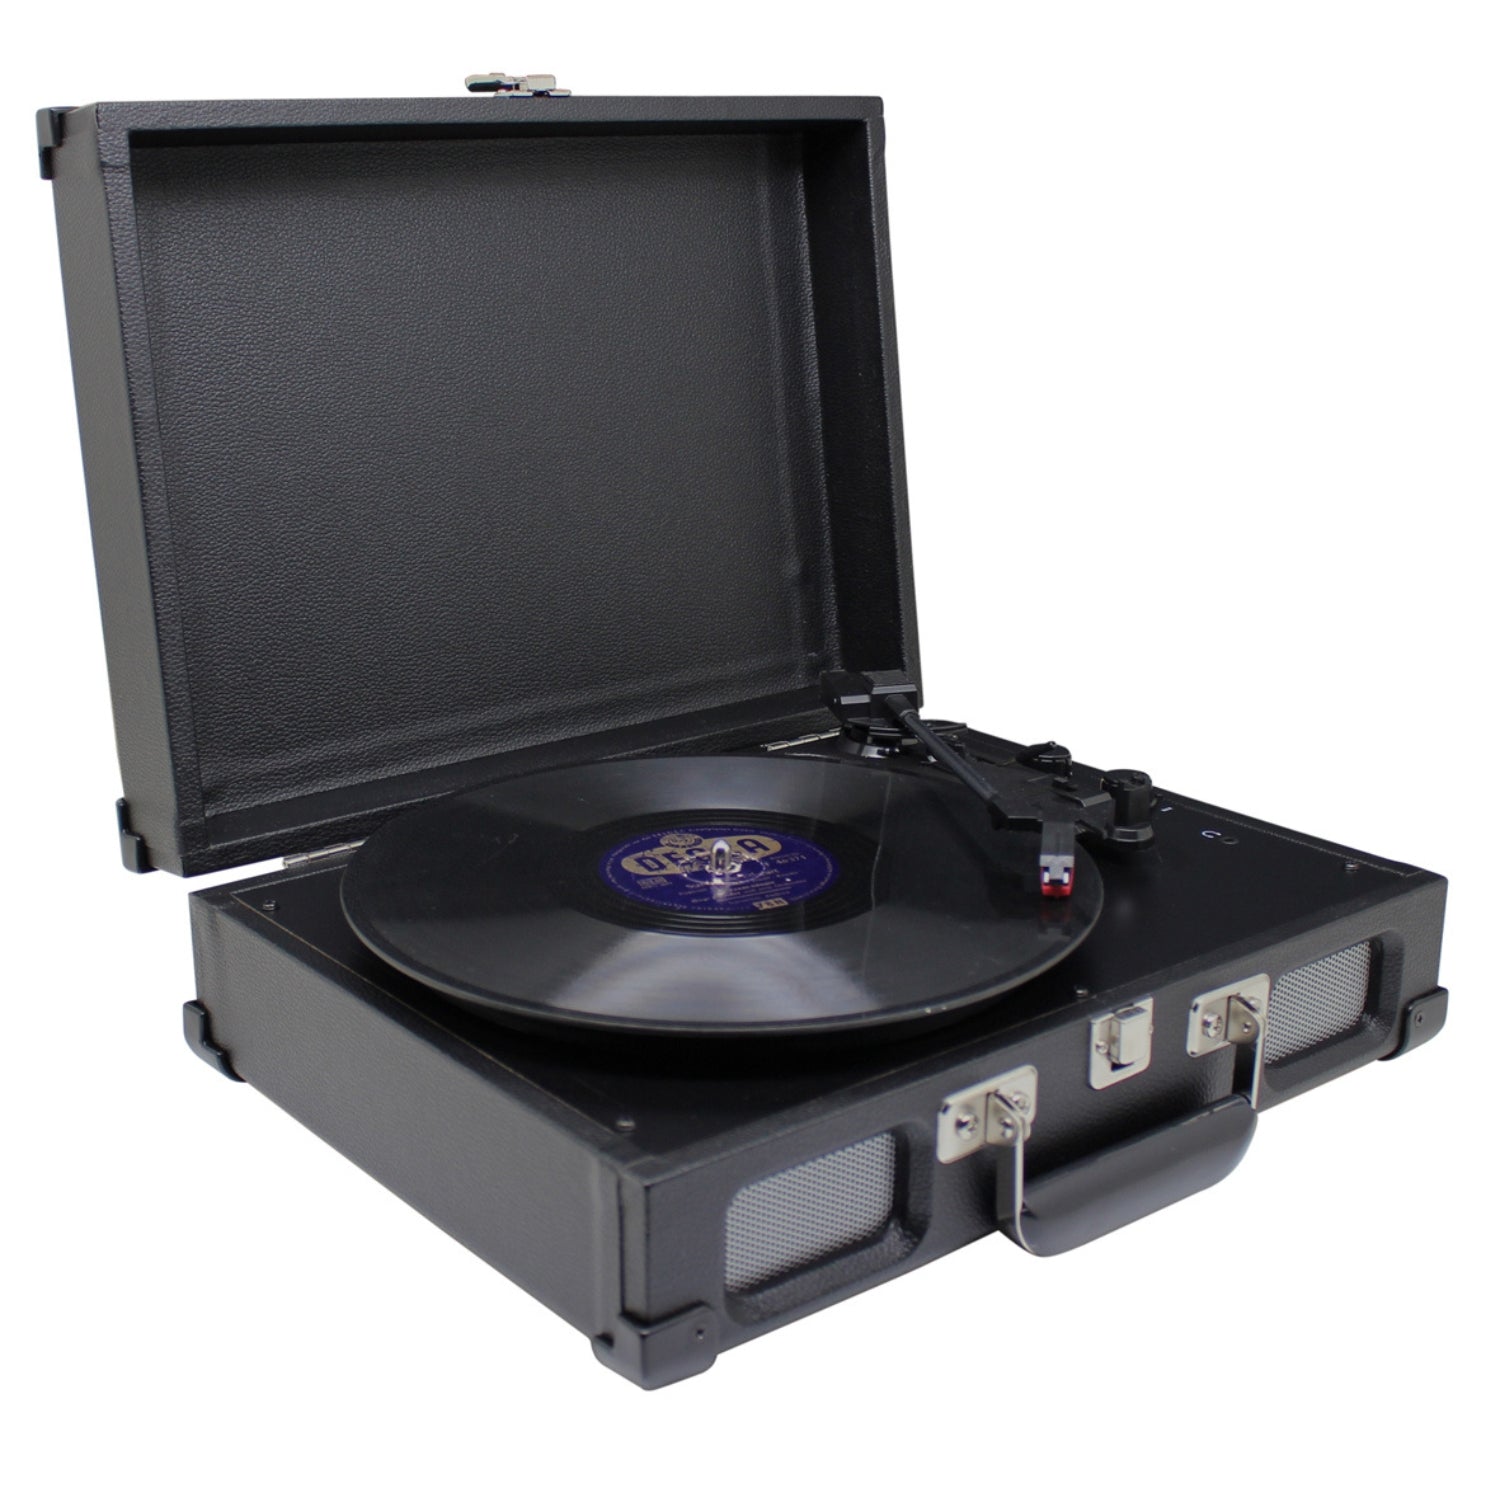 Soundmaster PL580 black nostalgia case turntable with headphone jack